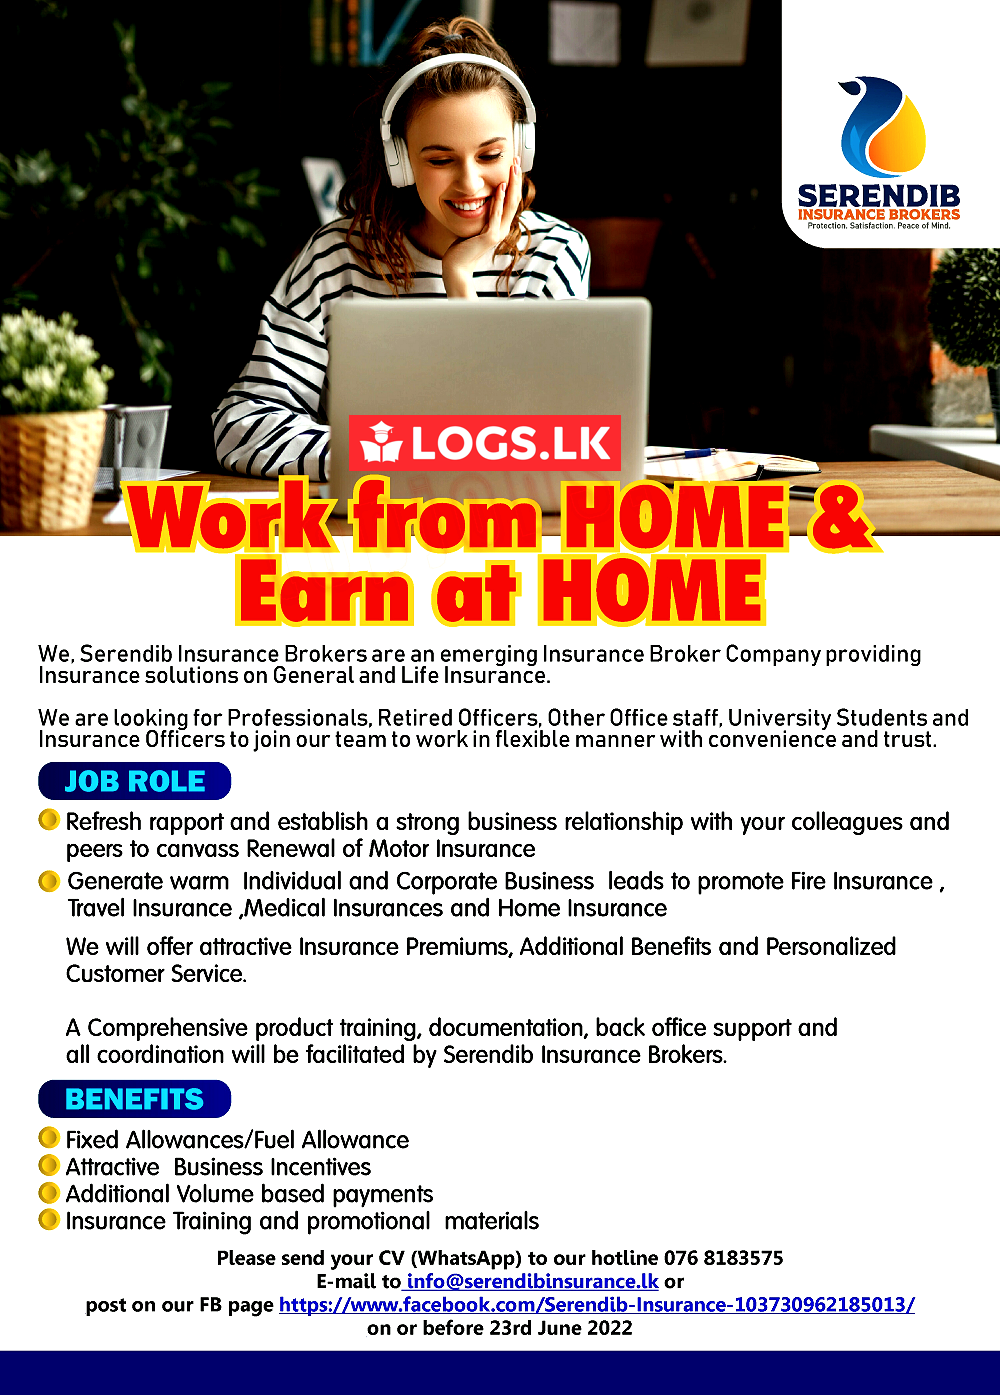 Work From Home Jobs Vacancies in Sri Lanka - Serendib Insurance Jobs Vacancies